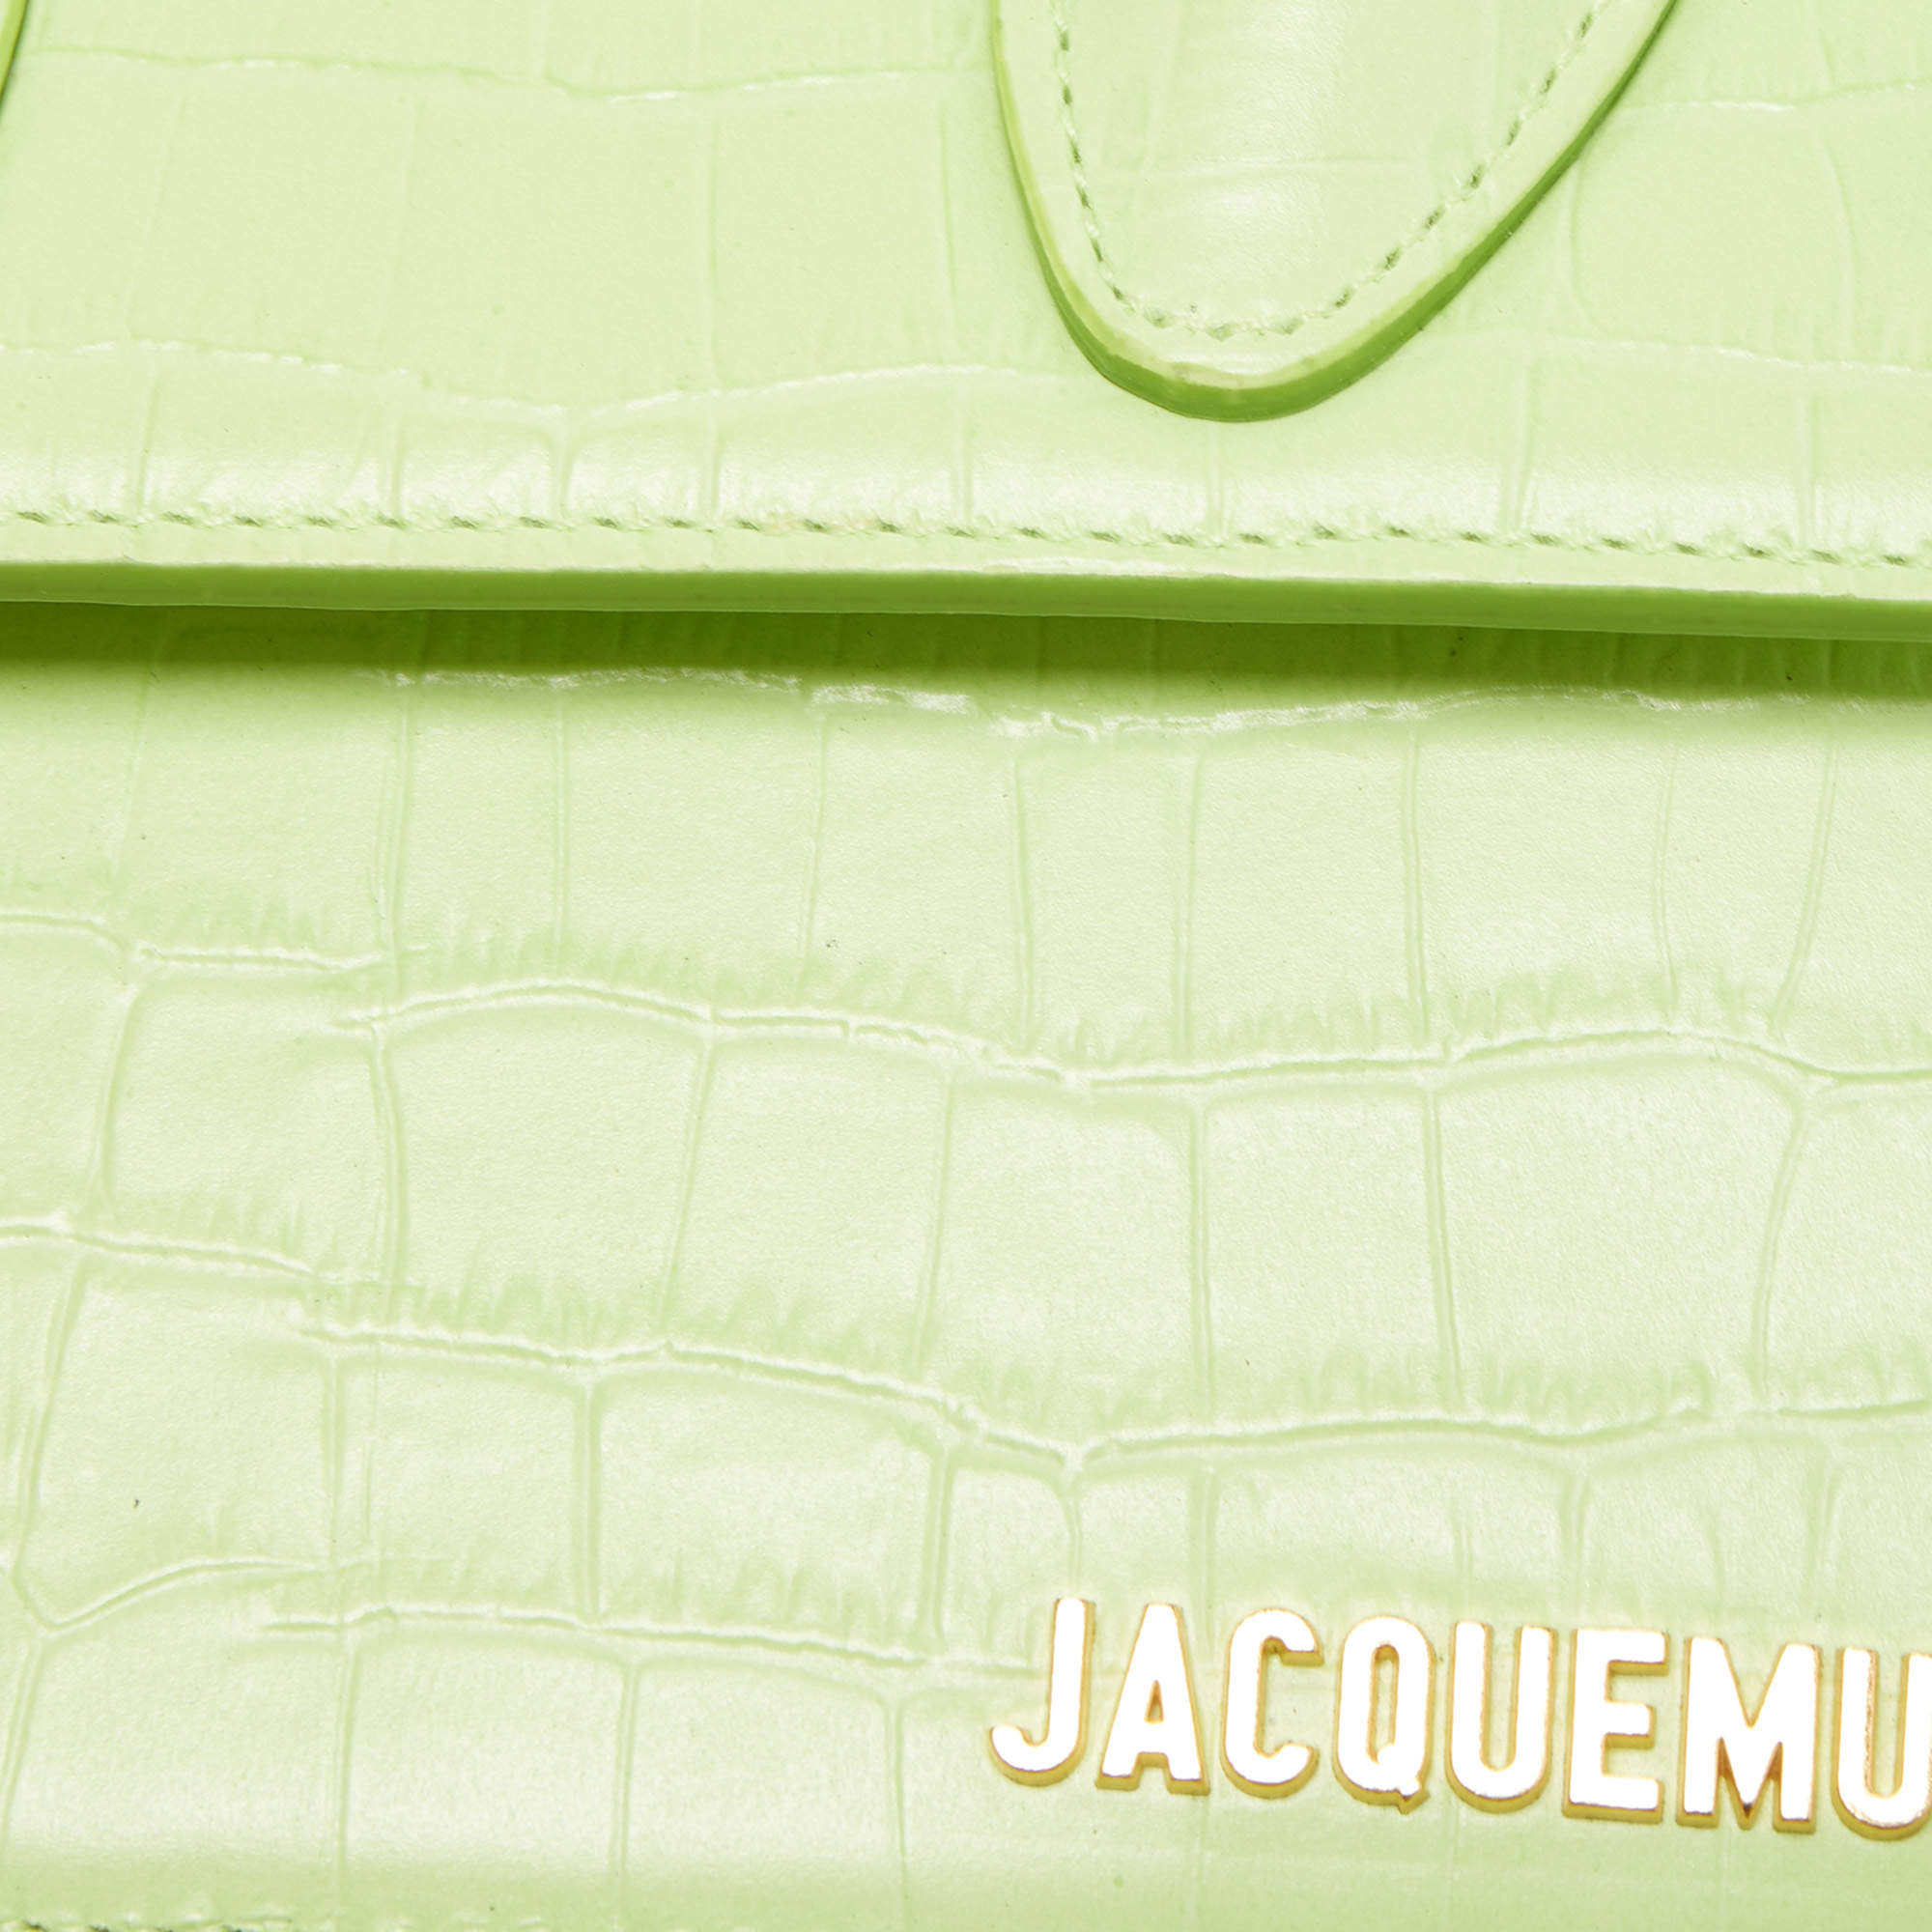 Le chiquito noeud handbag Jacquemus Green in Suede - 30487031